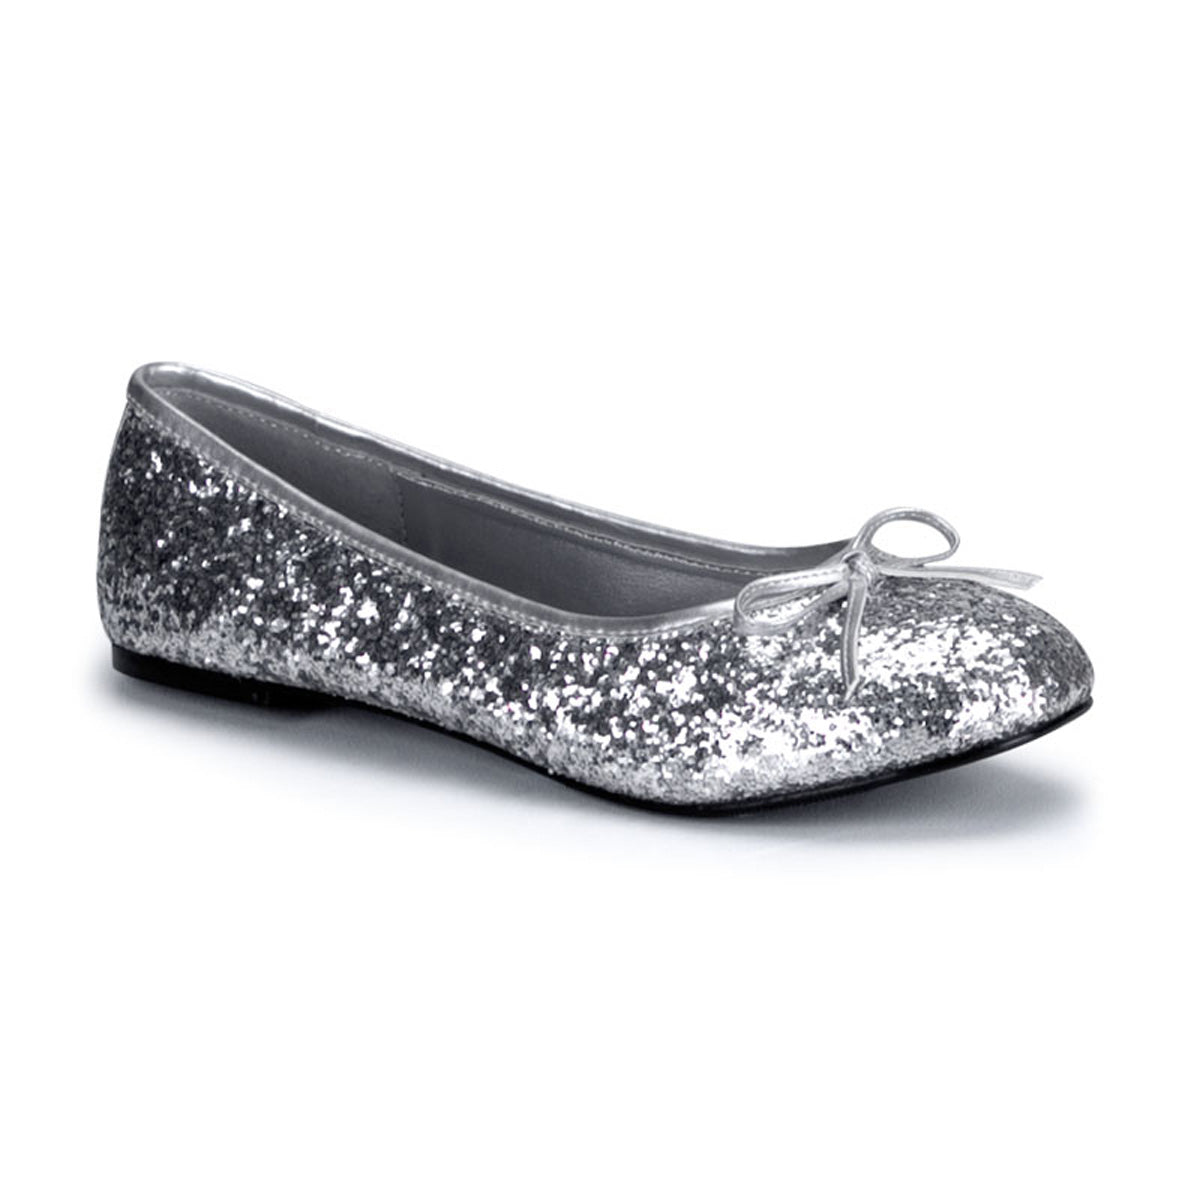 STAR-16G Pleasers Funtasma Silver Glitter Women's Sexy Shoes